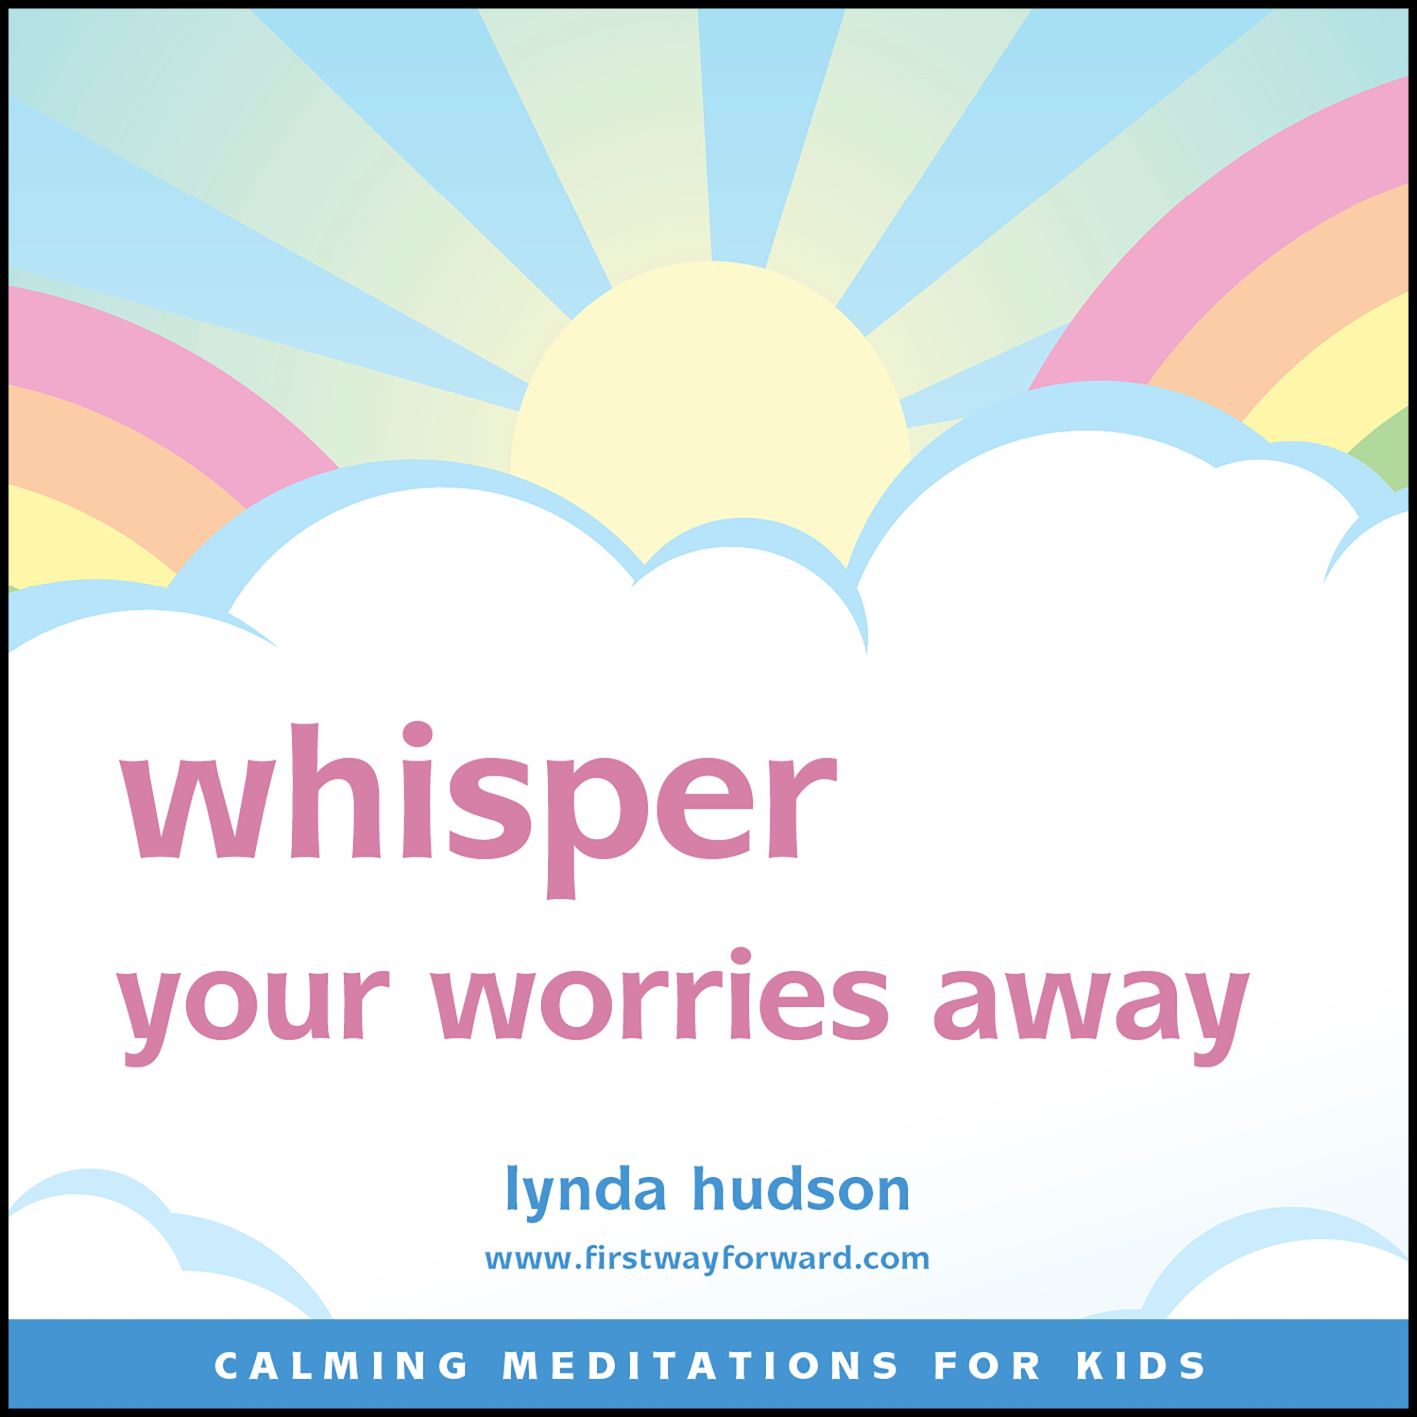 Whisper your worries away